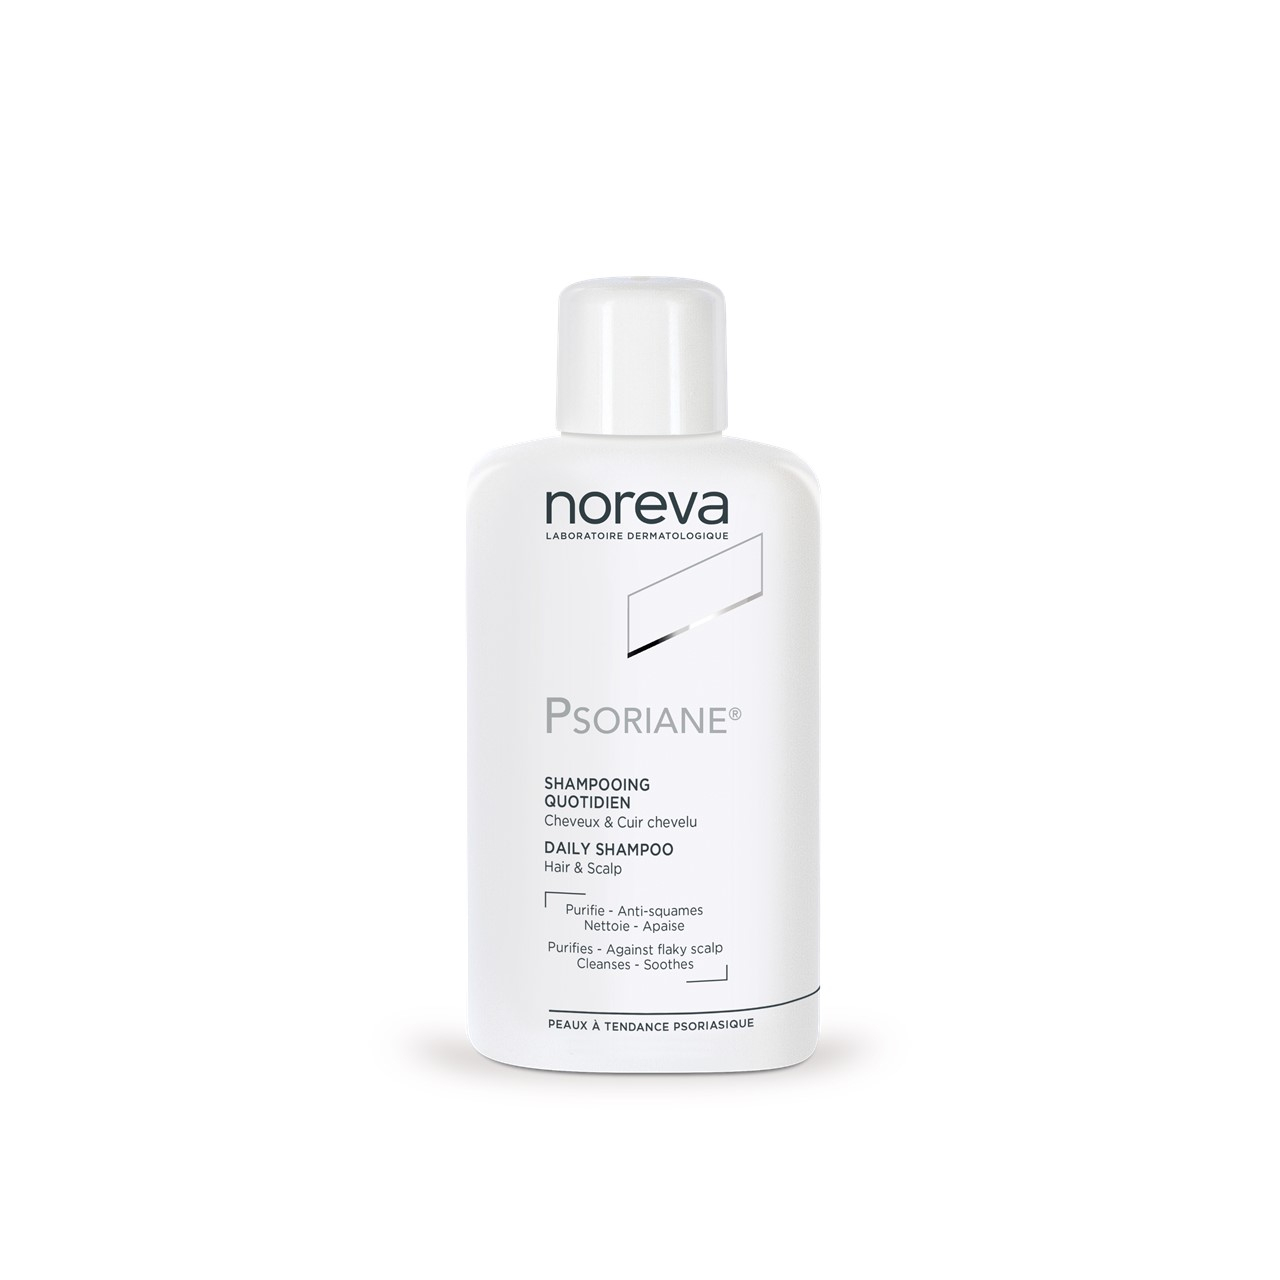 Noreva Psoriane Daily Shampoo 125ml (4.23fl oz)